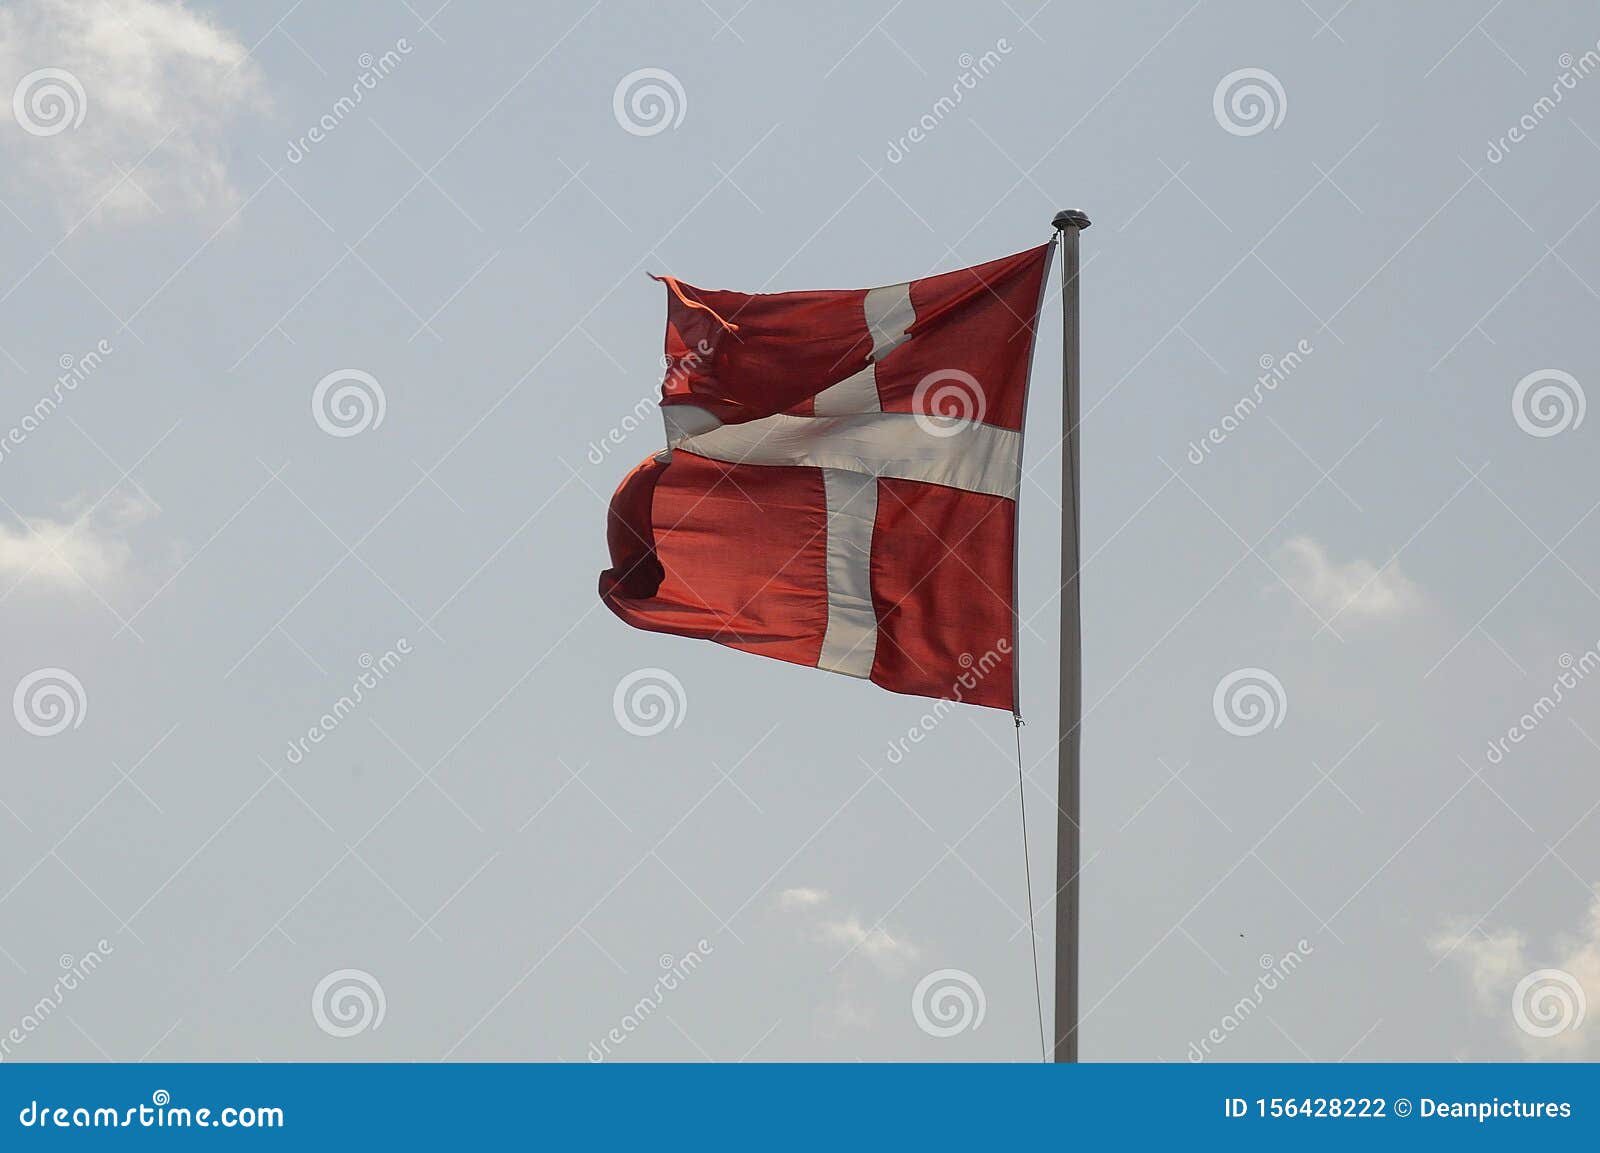 dannebrog or in othe word danish flag flys over copenhagen